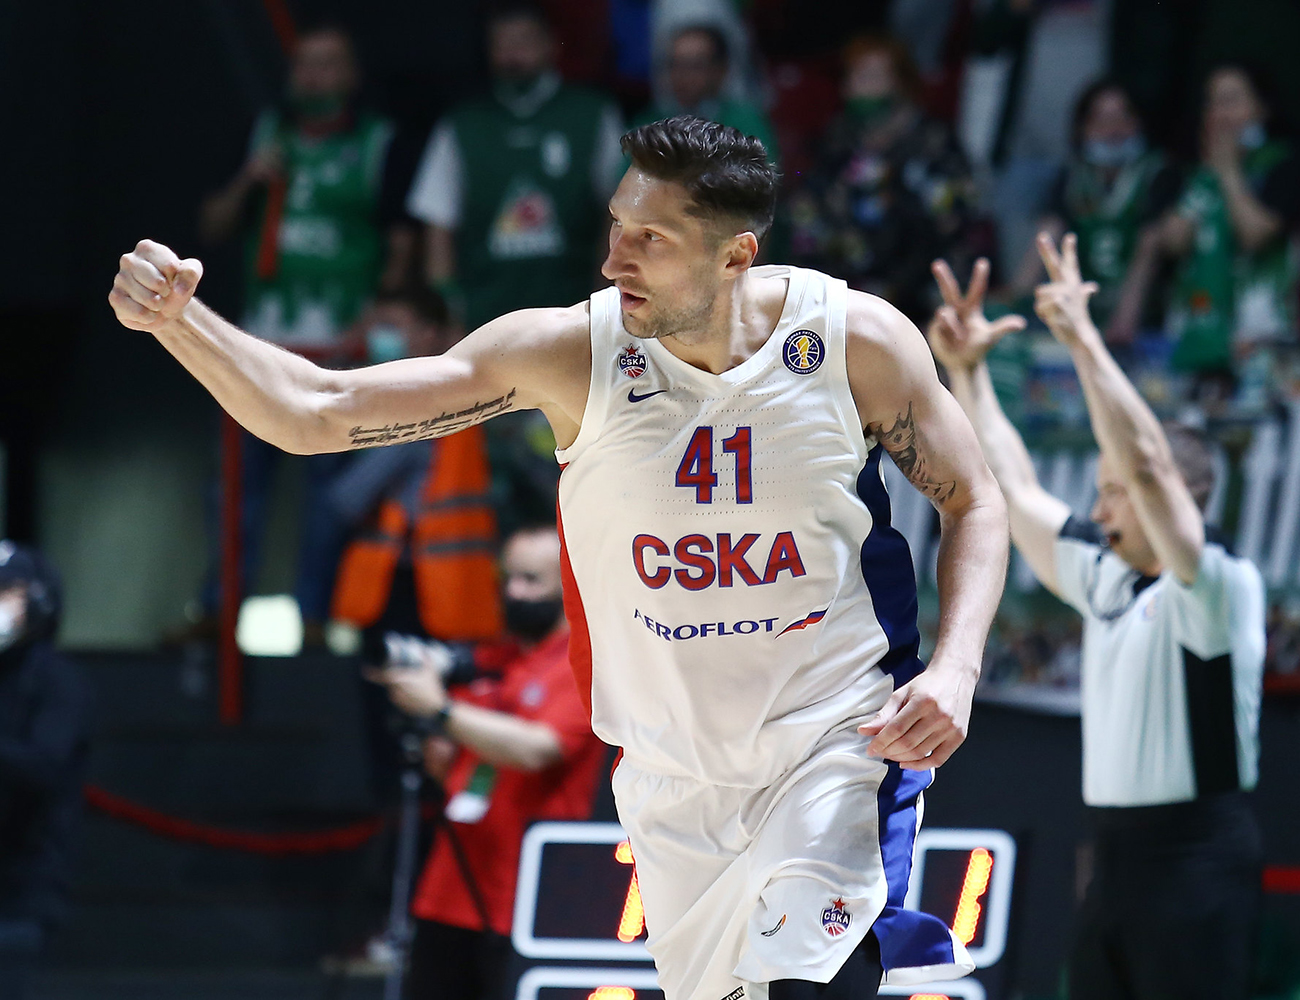 CSKA extends contract with Nikita Kurbanov and splits with Darran Hilliard